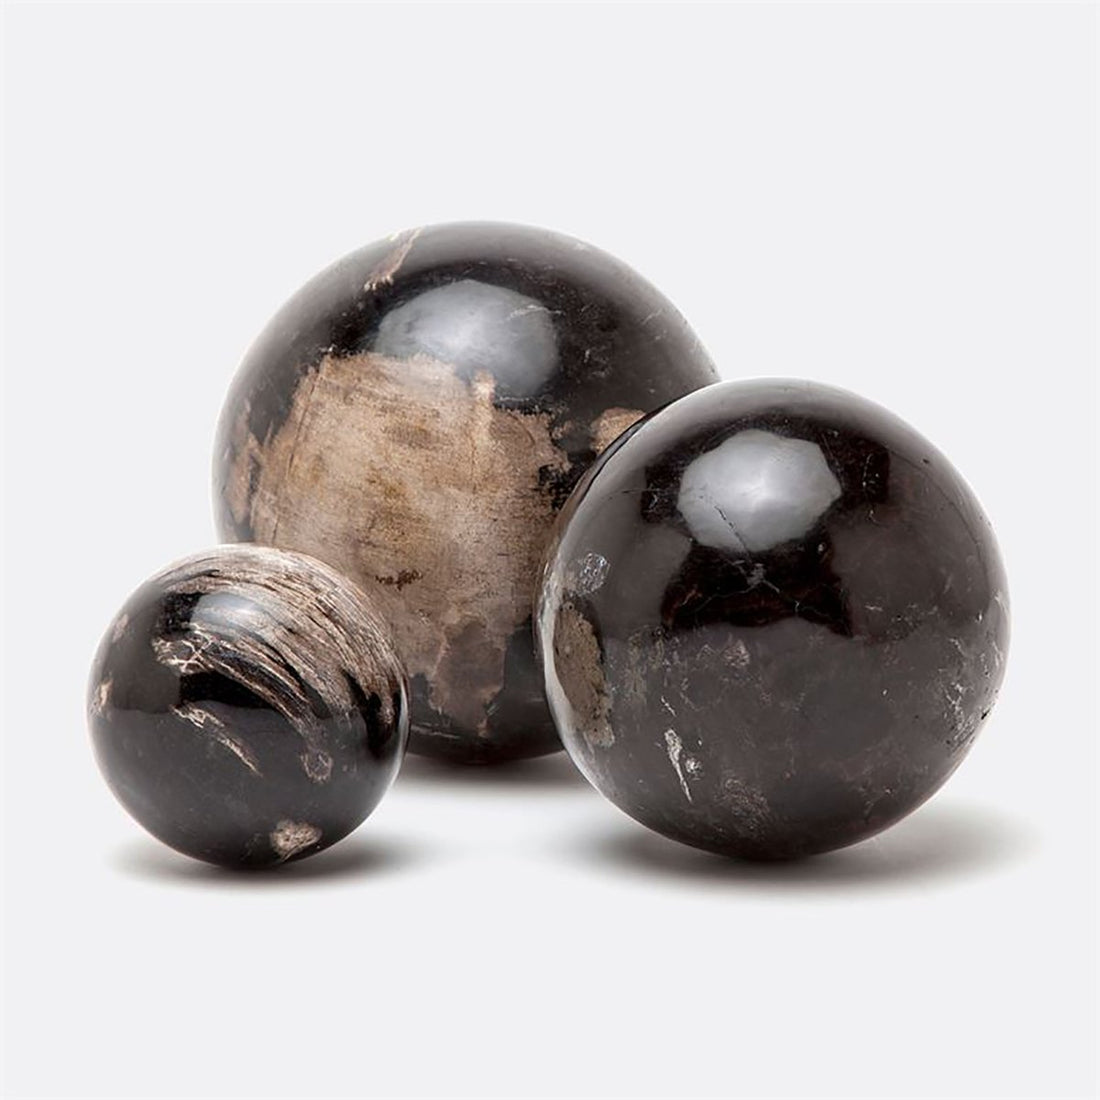 Made Goods, Bram Petrified Wood Balls, Other-Accessories